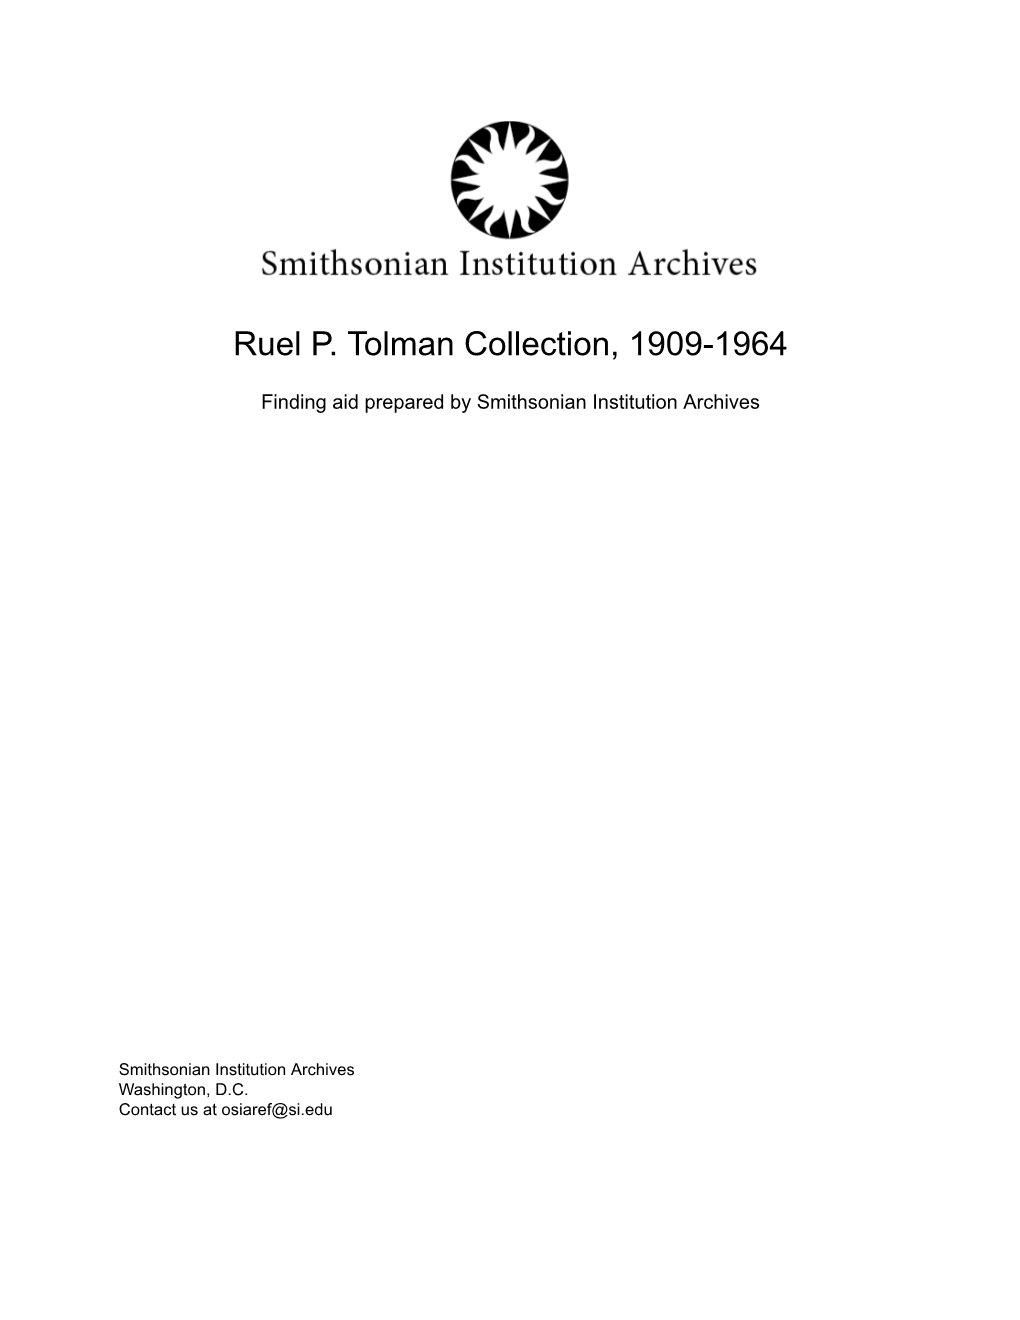 Ruel P. Tolman Collection, 1909-1964